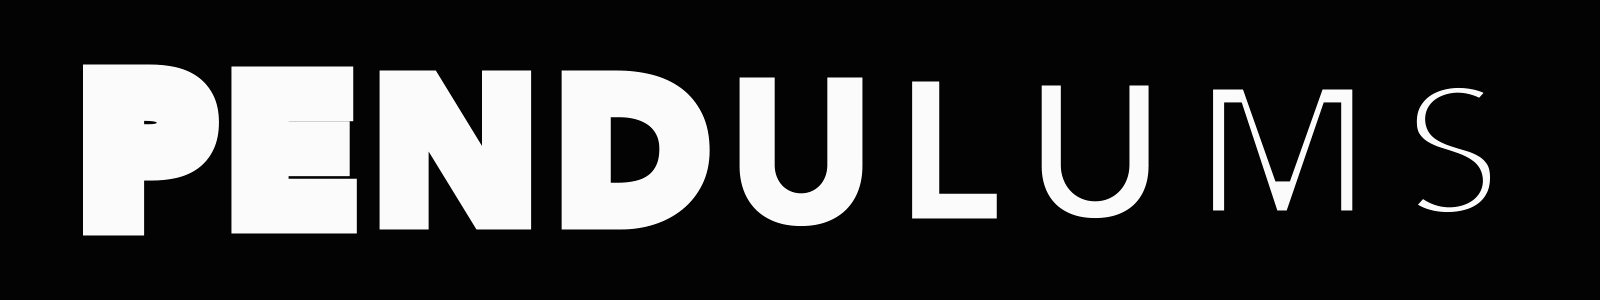 pendulum type logo